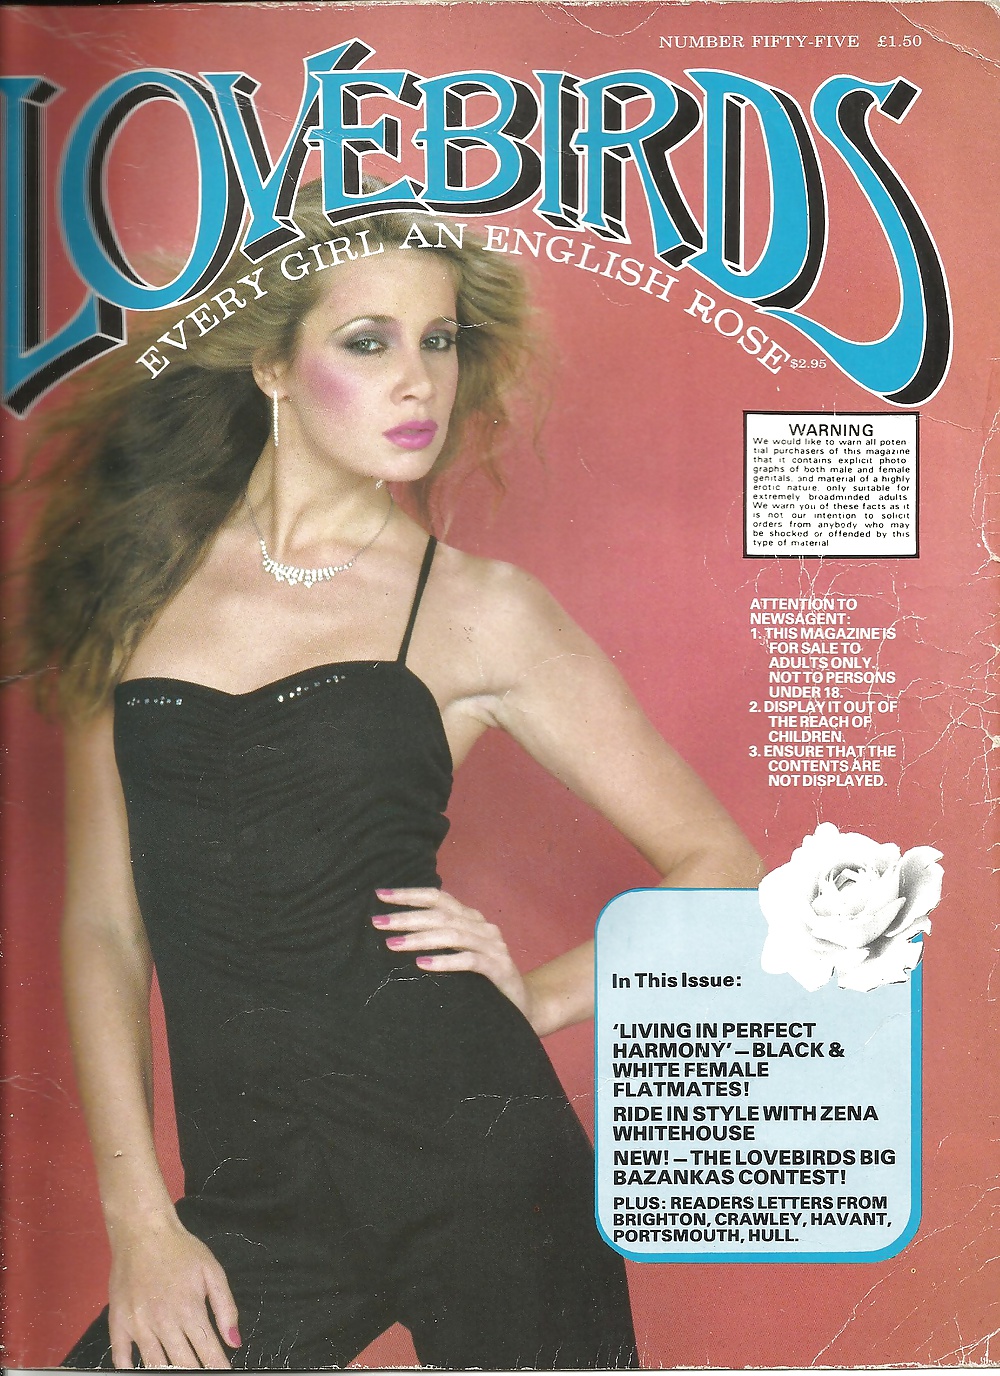 1980s Porn Scans - Vintage uk magazine scan-Lovebirds no.55 1980s - 30 Pics ...